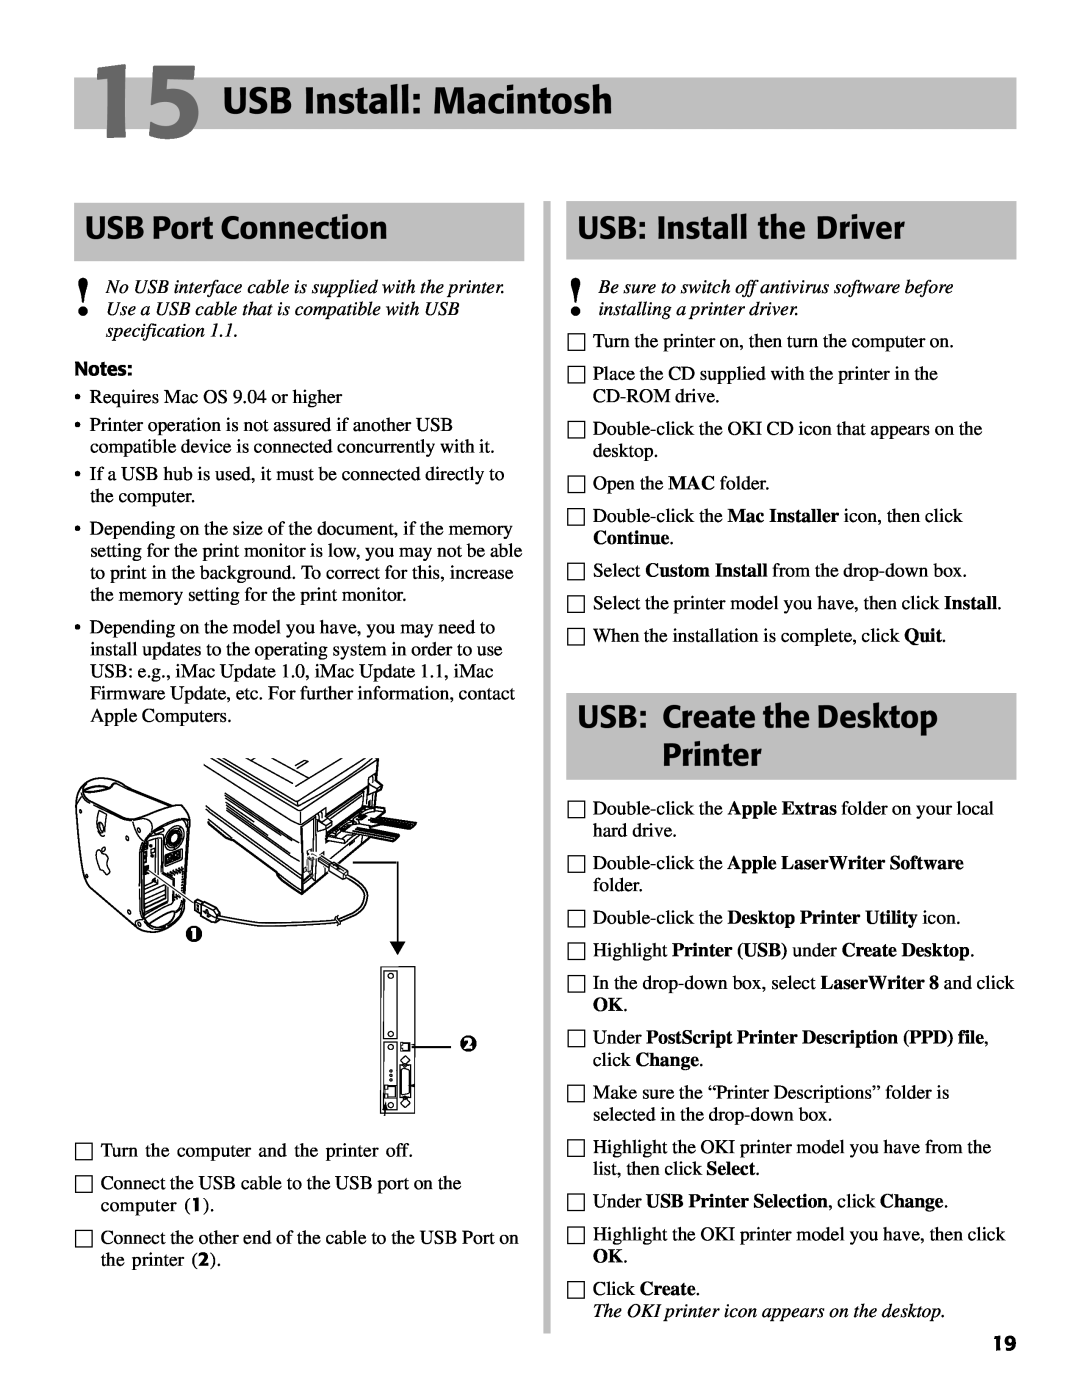 Oki C7000 setup guide USB Install Macintosh, USB Install the Driver, USB Create the Desktop Printer, USB Port Connection 